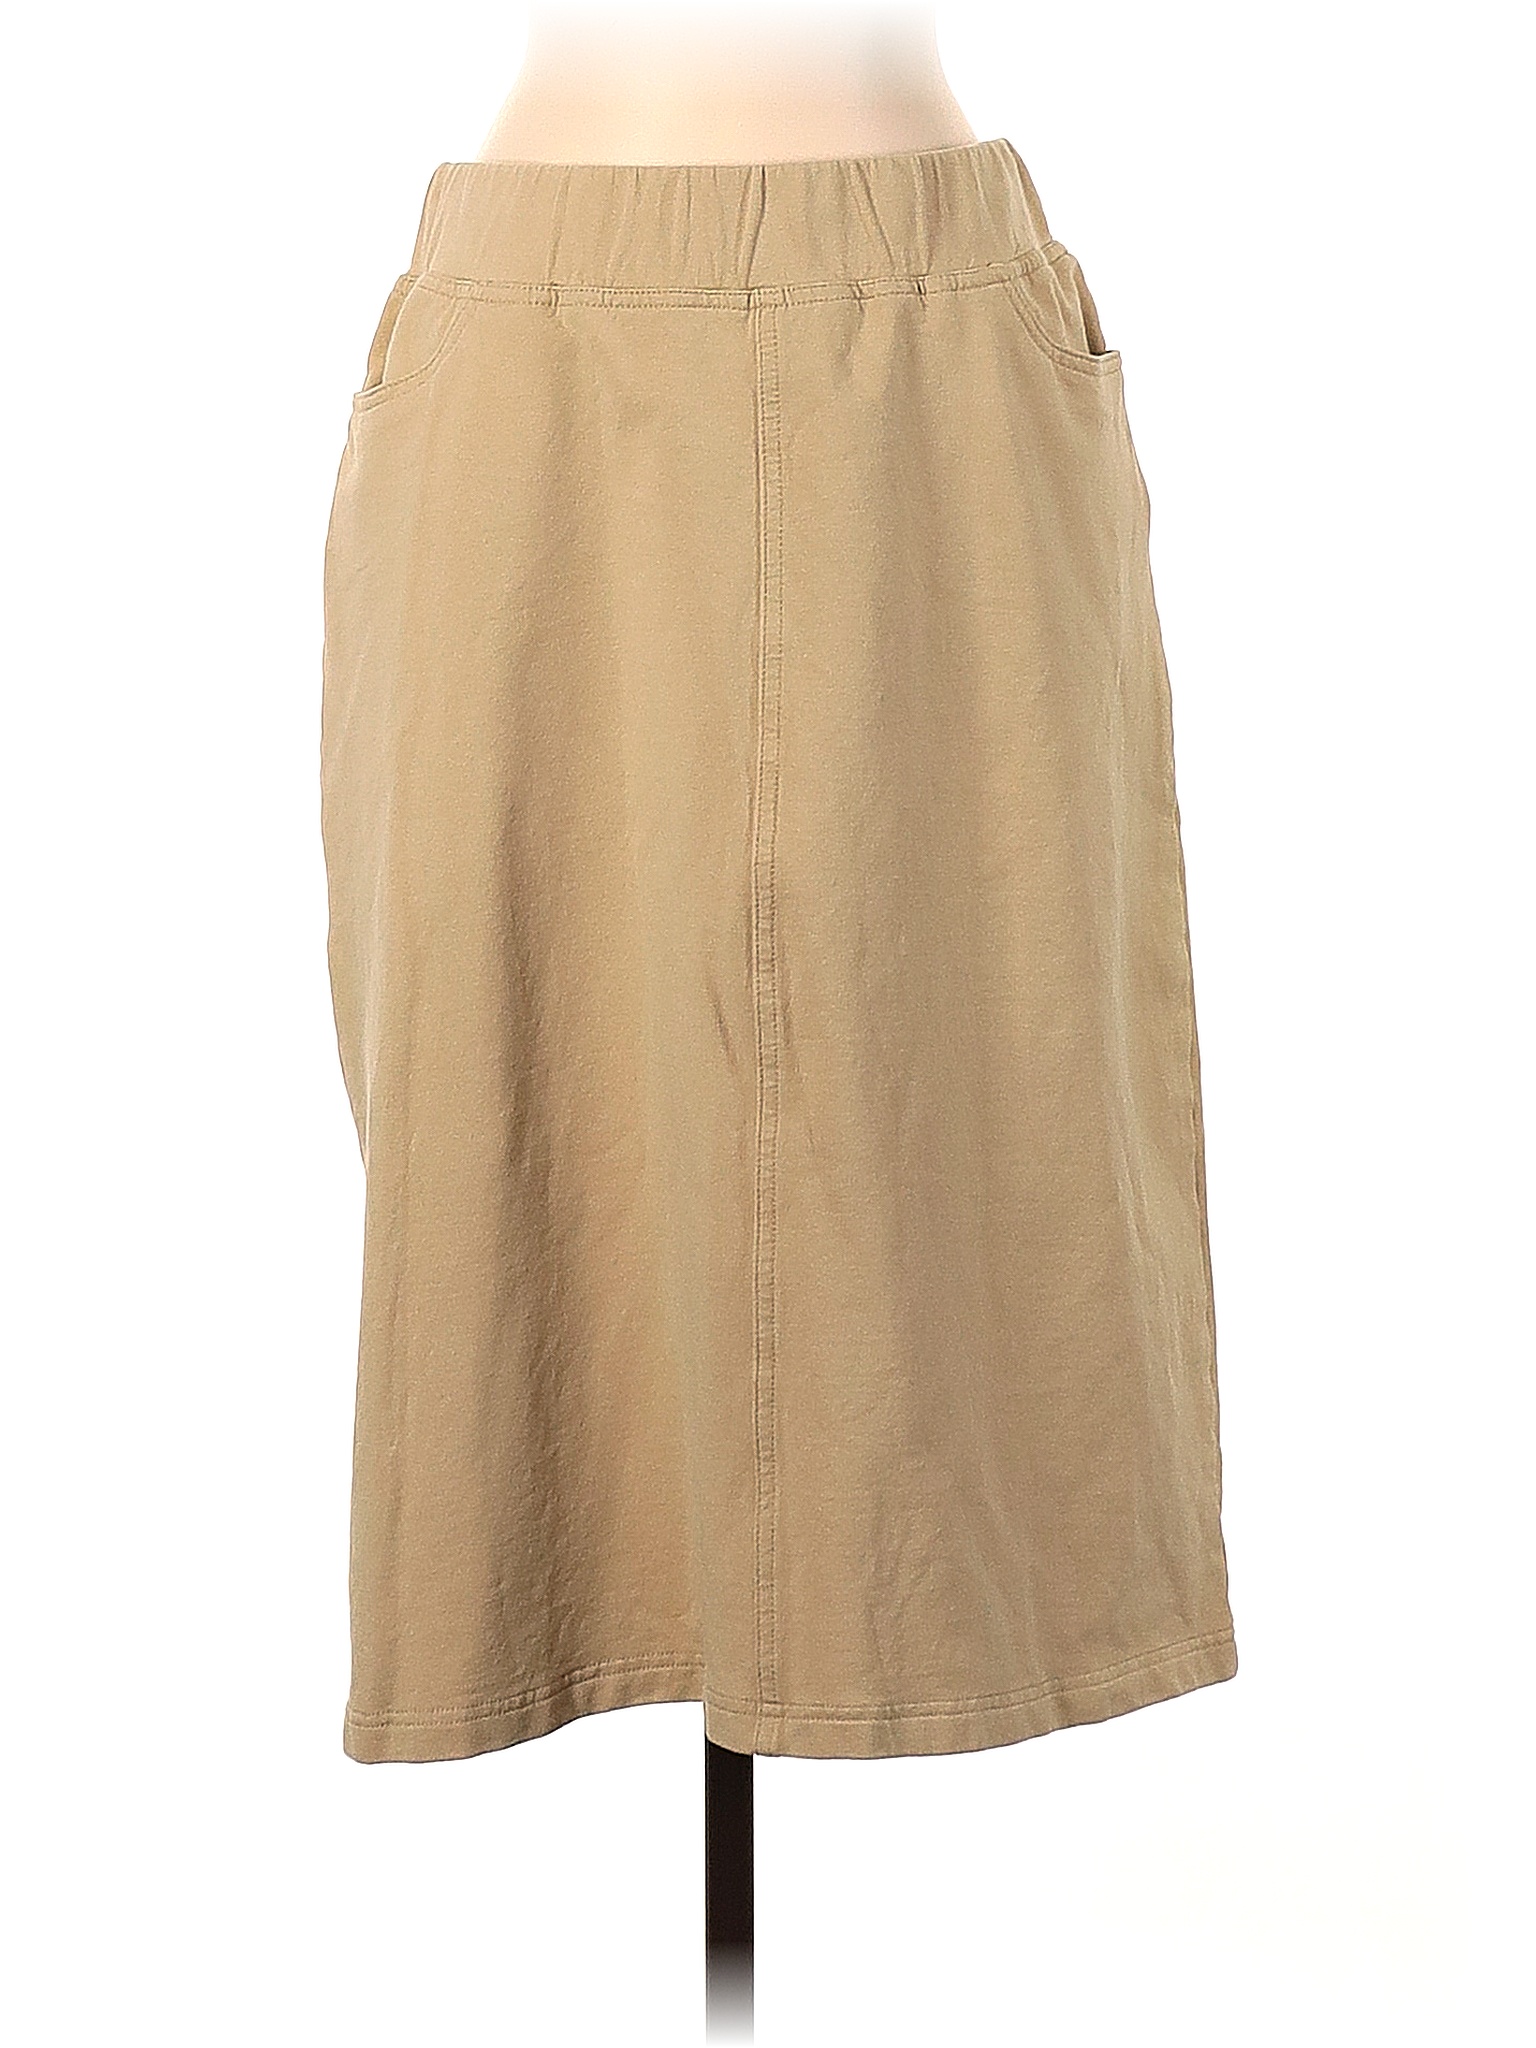 Denim & Co Solid Colored Tan Denim Skirt Size S - 45% off | thredUP